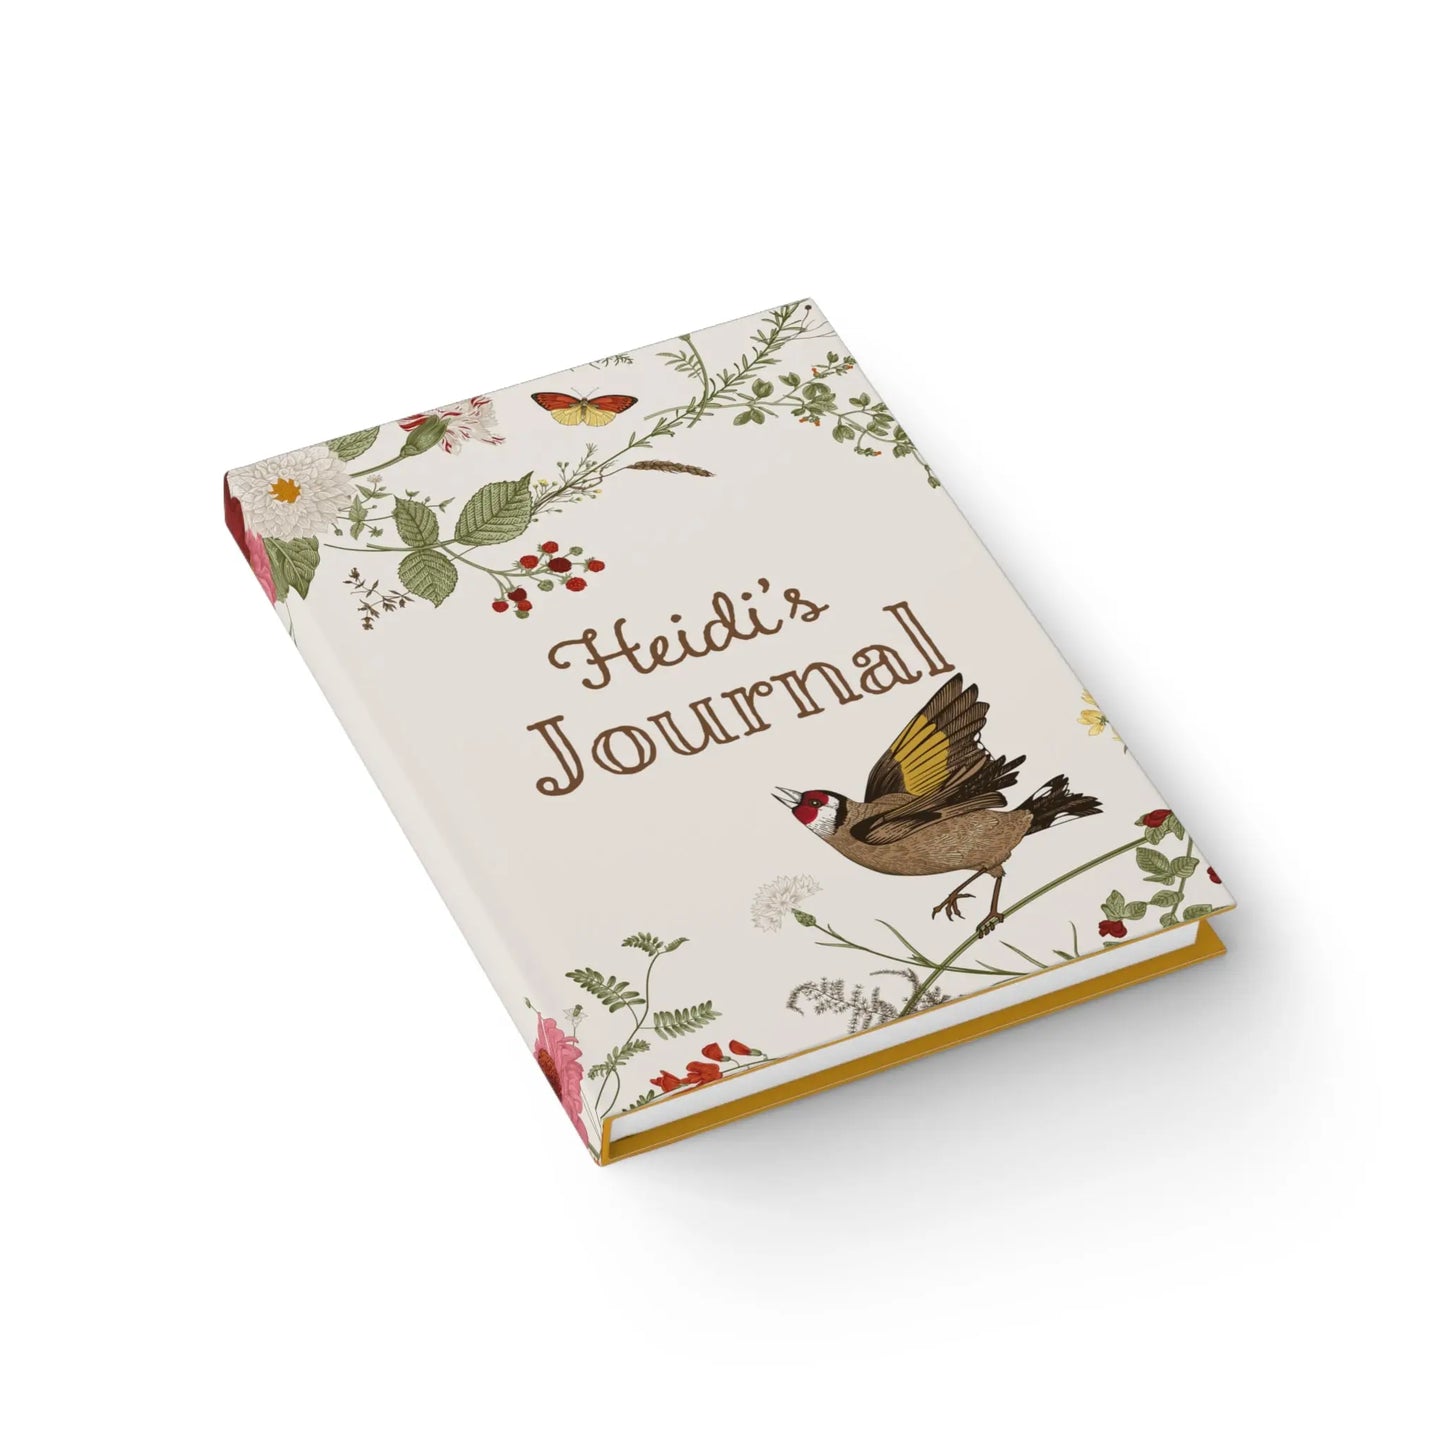 Personalized Journal - Bird Floral Printify